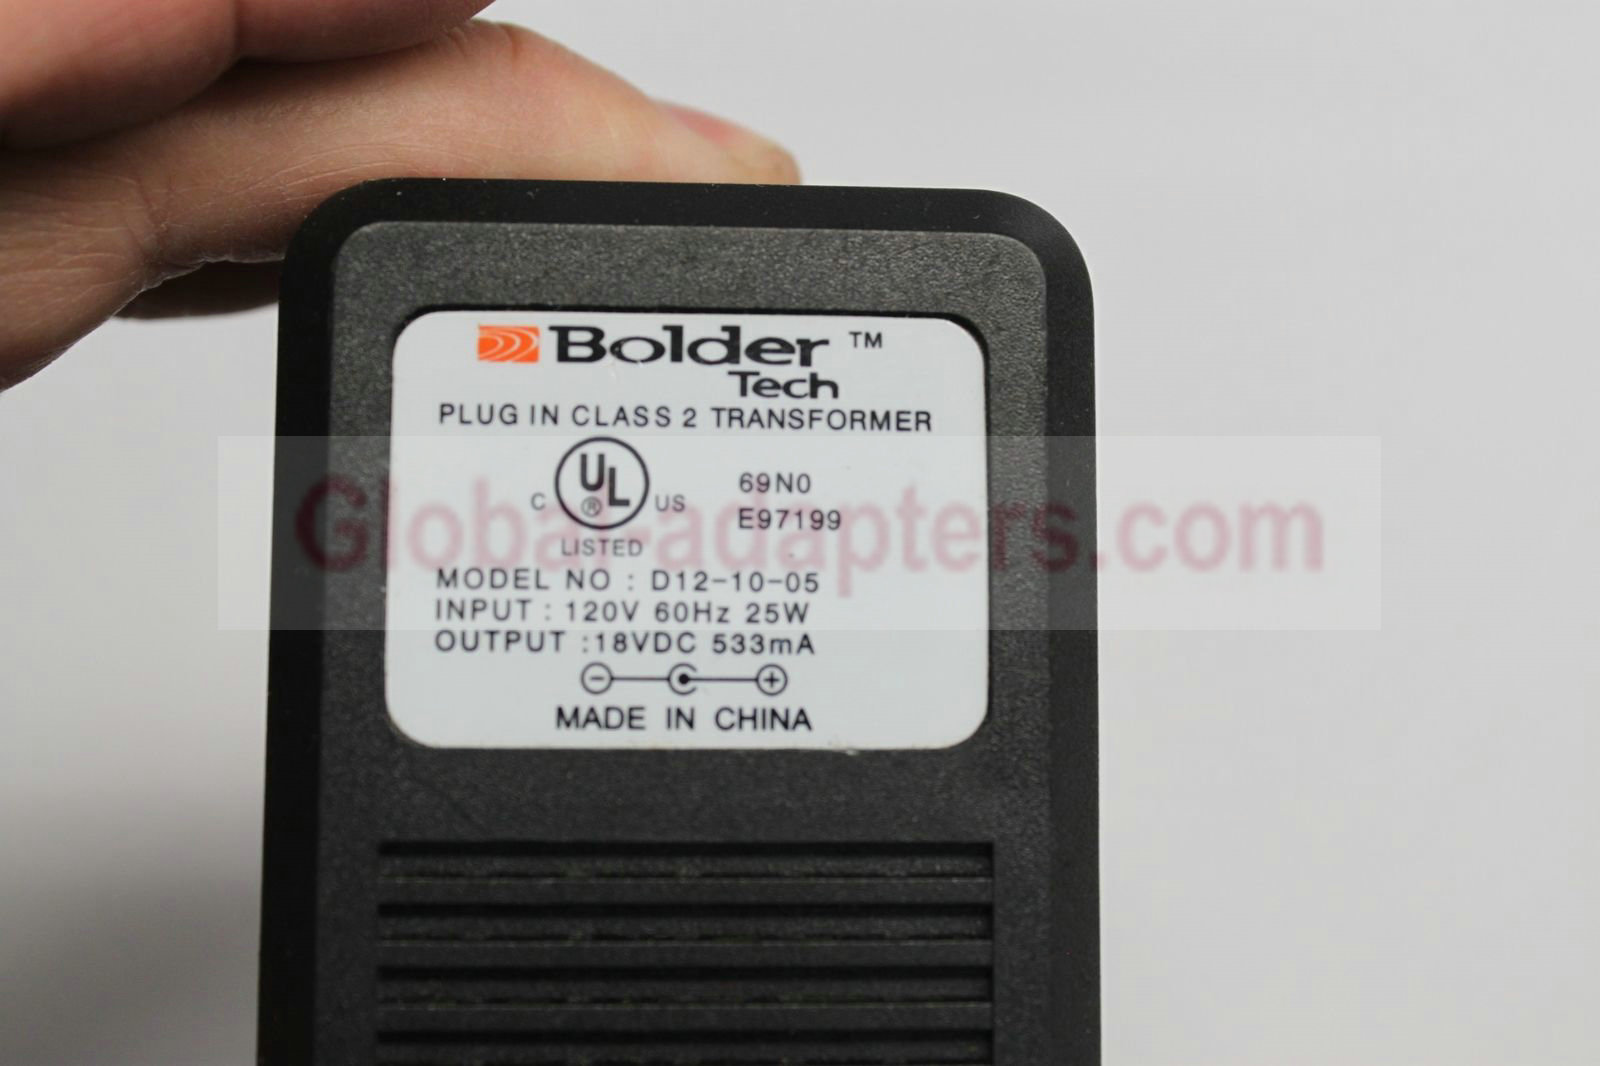 New 18V 533mA Bolder Tech D12-10-05 Plug-In Class 2 Transformer Power Supply Ac Adapter - Click Image to Close